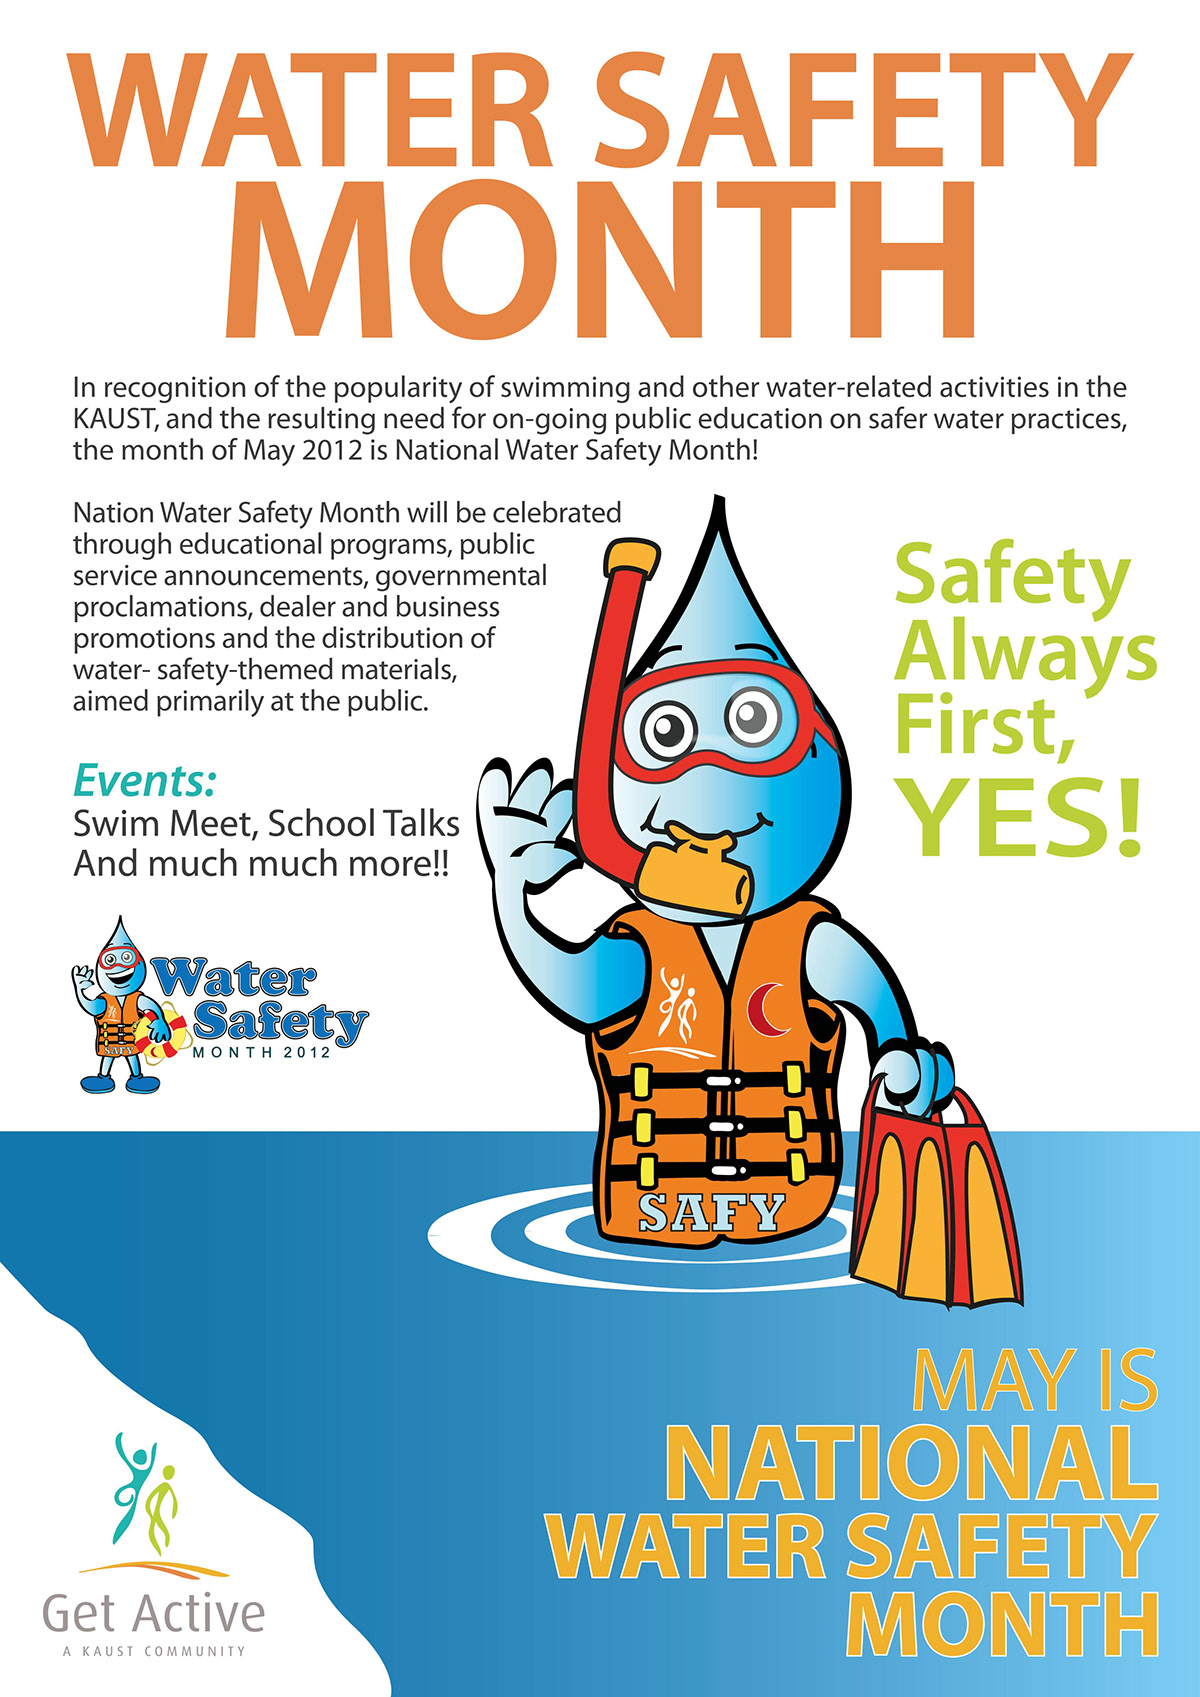 kaust jeddah Saudi Arabia water safety aquatics Mascot drop water Character kids